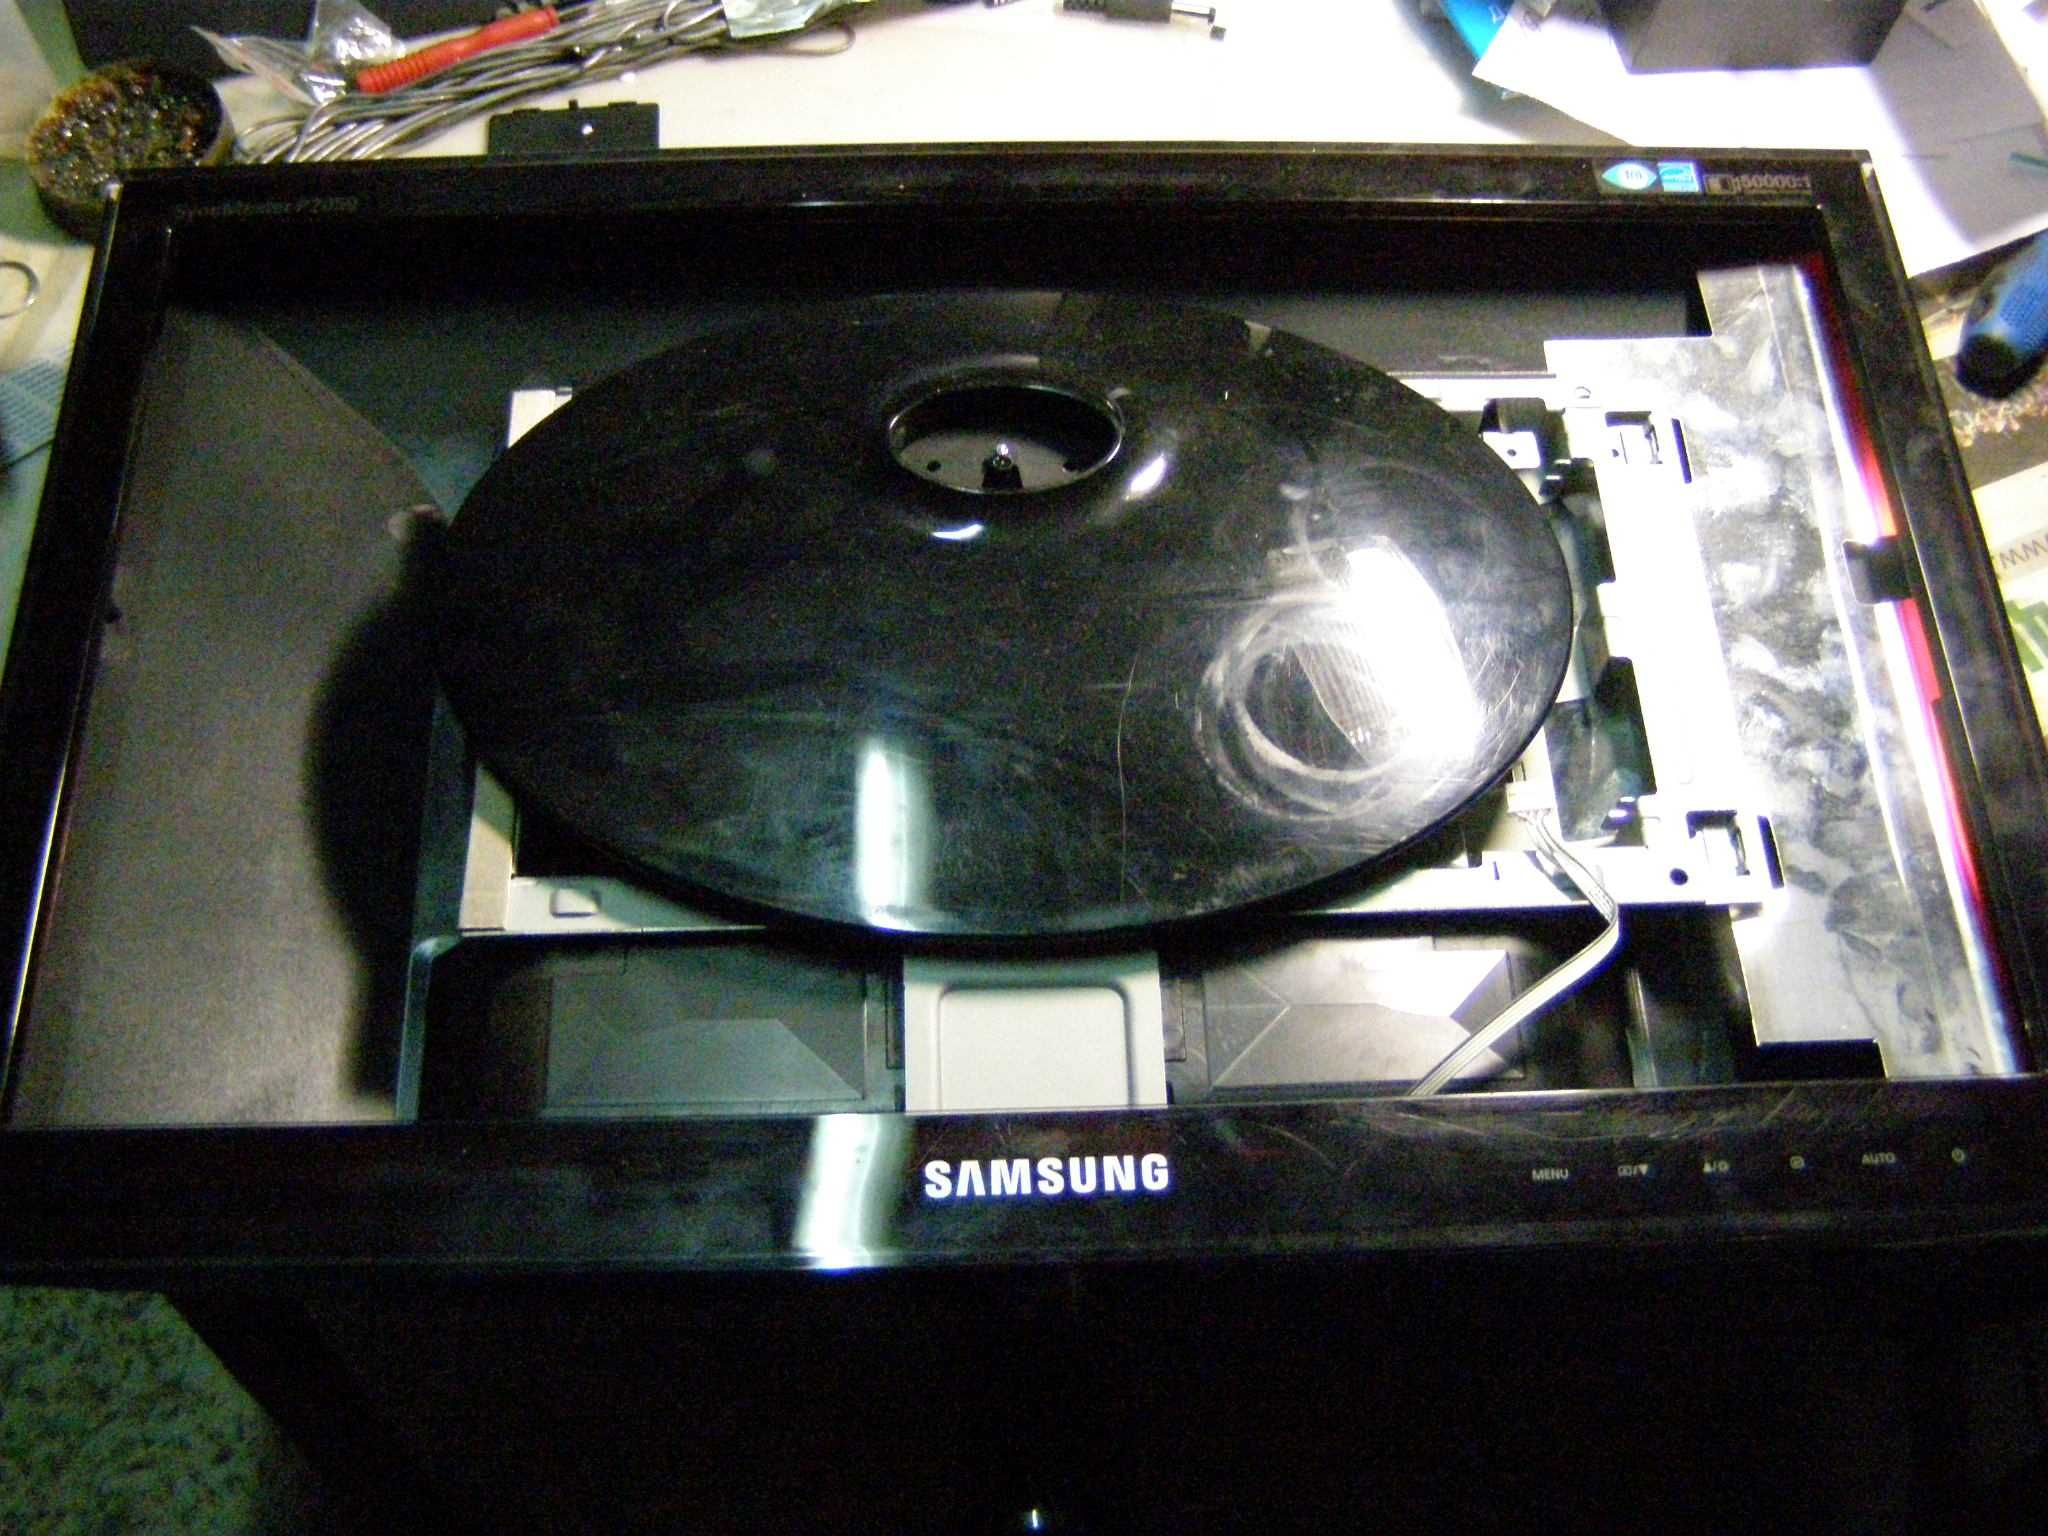 Samsung P2050N---разборка